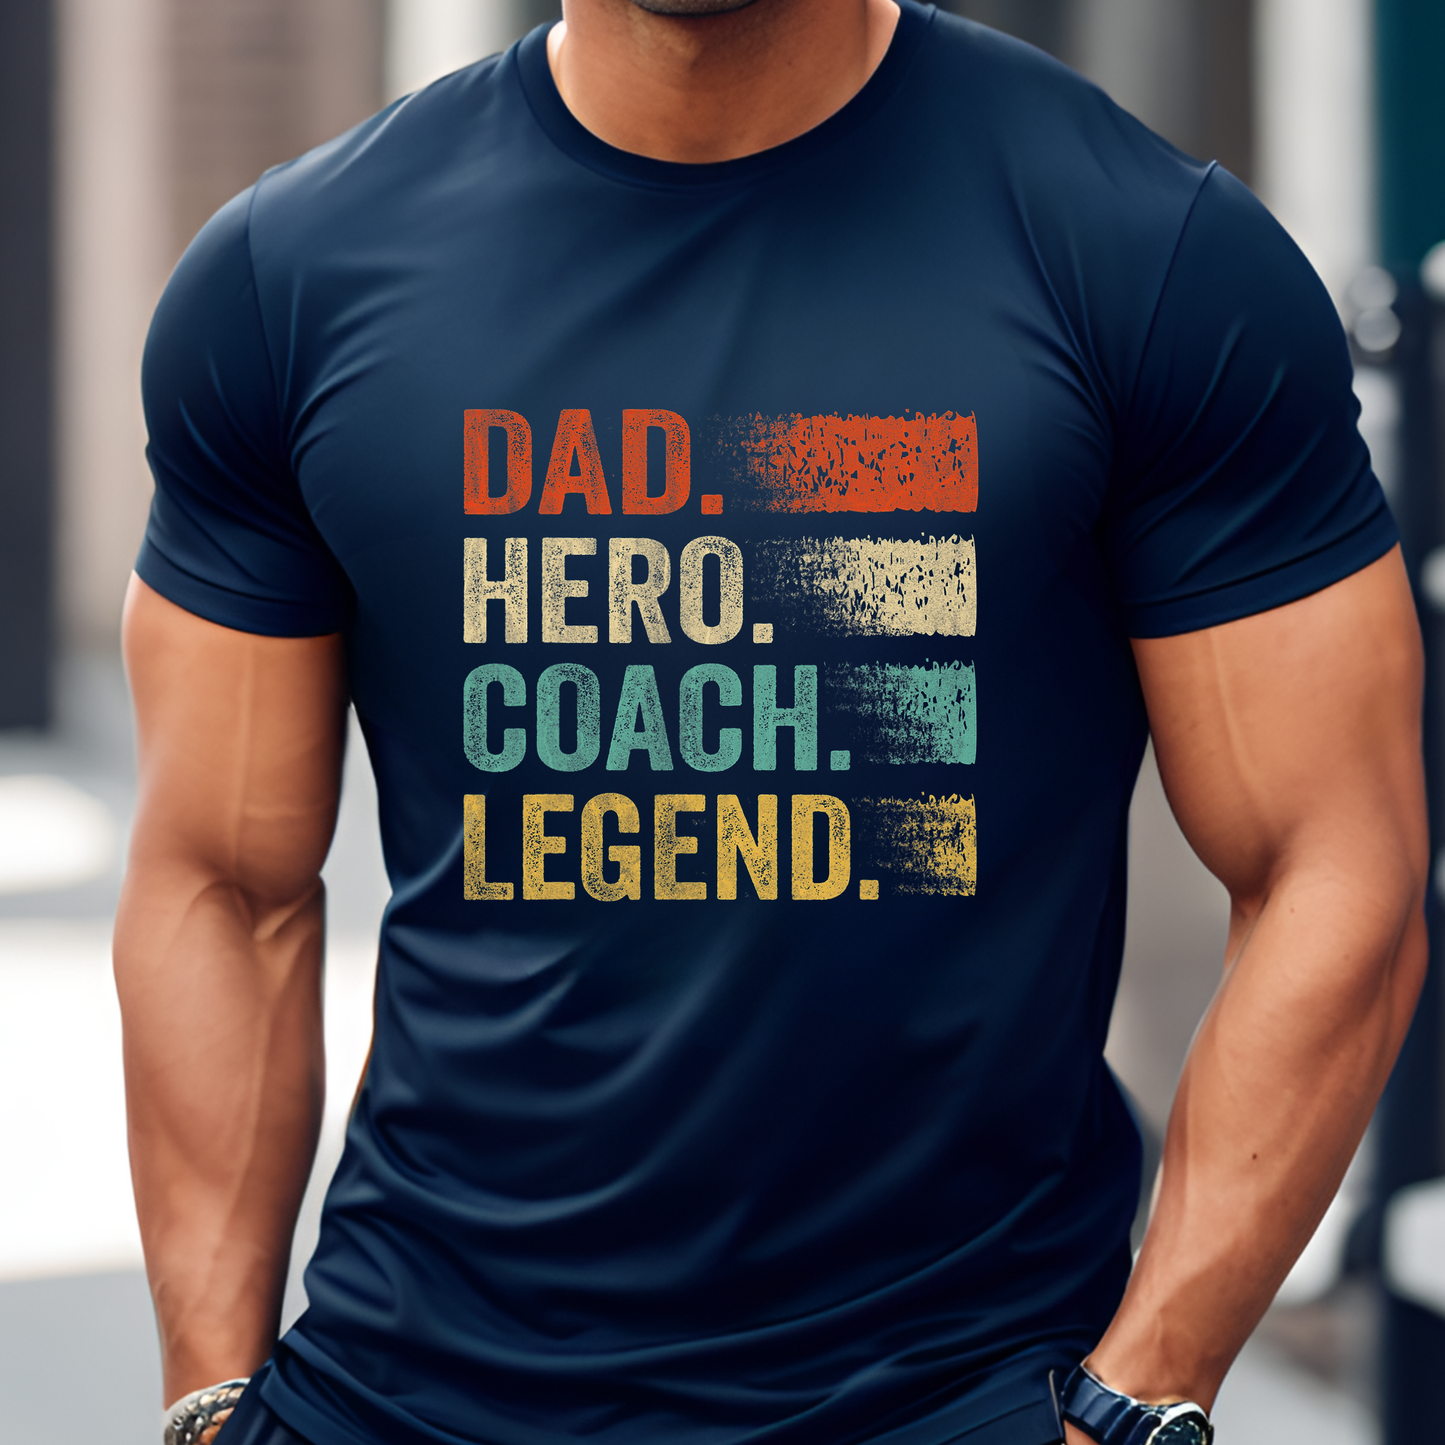 Dad, Hero, Coach, Legend